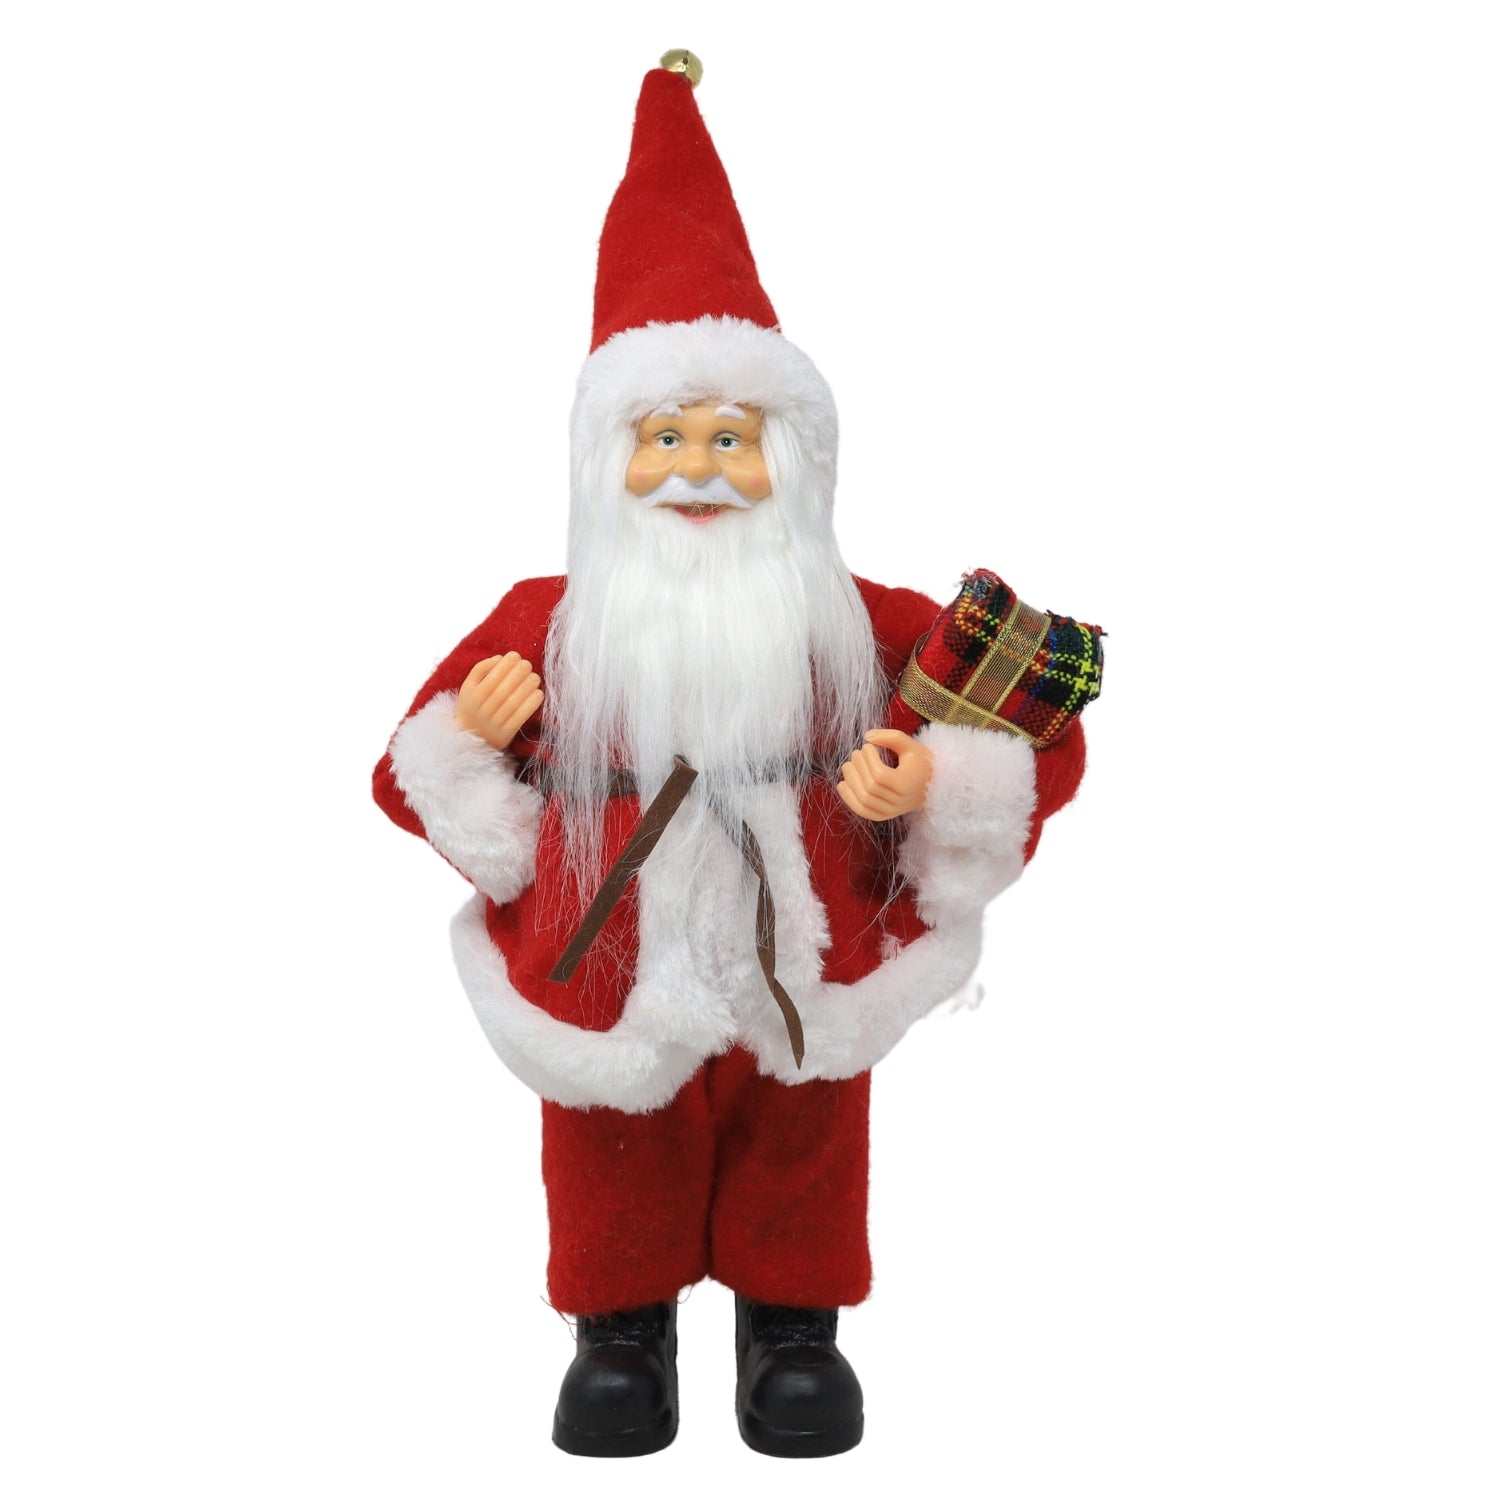 30cm Standing Santa Claus Figure